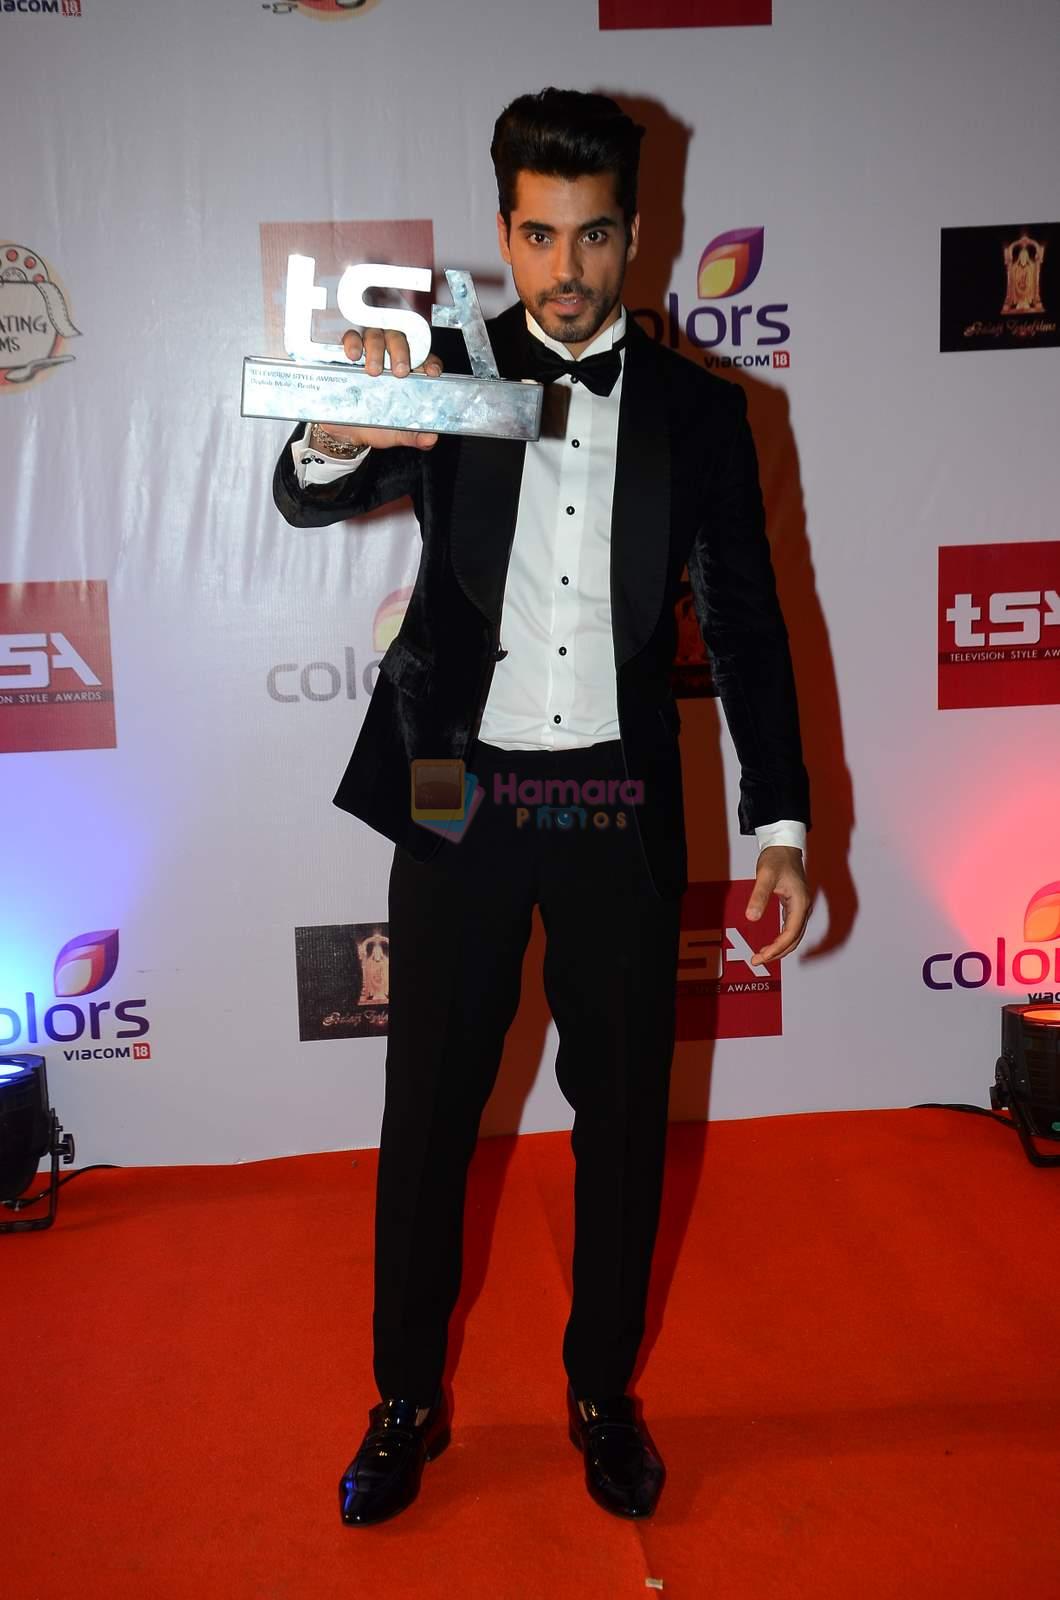 Gautam Gulati at Television Style Awards in Filmcity on 13th March 2015